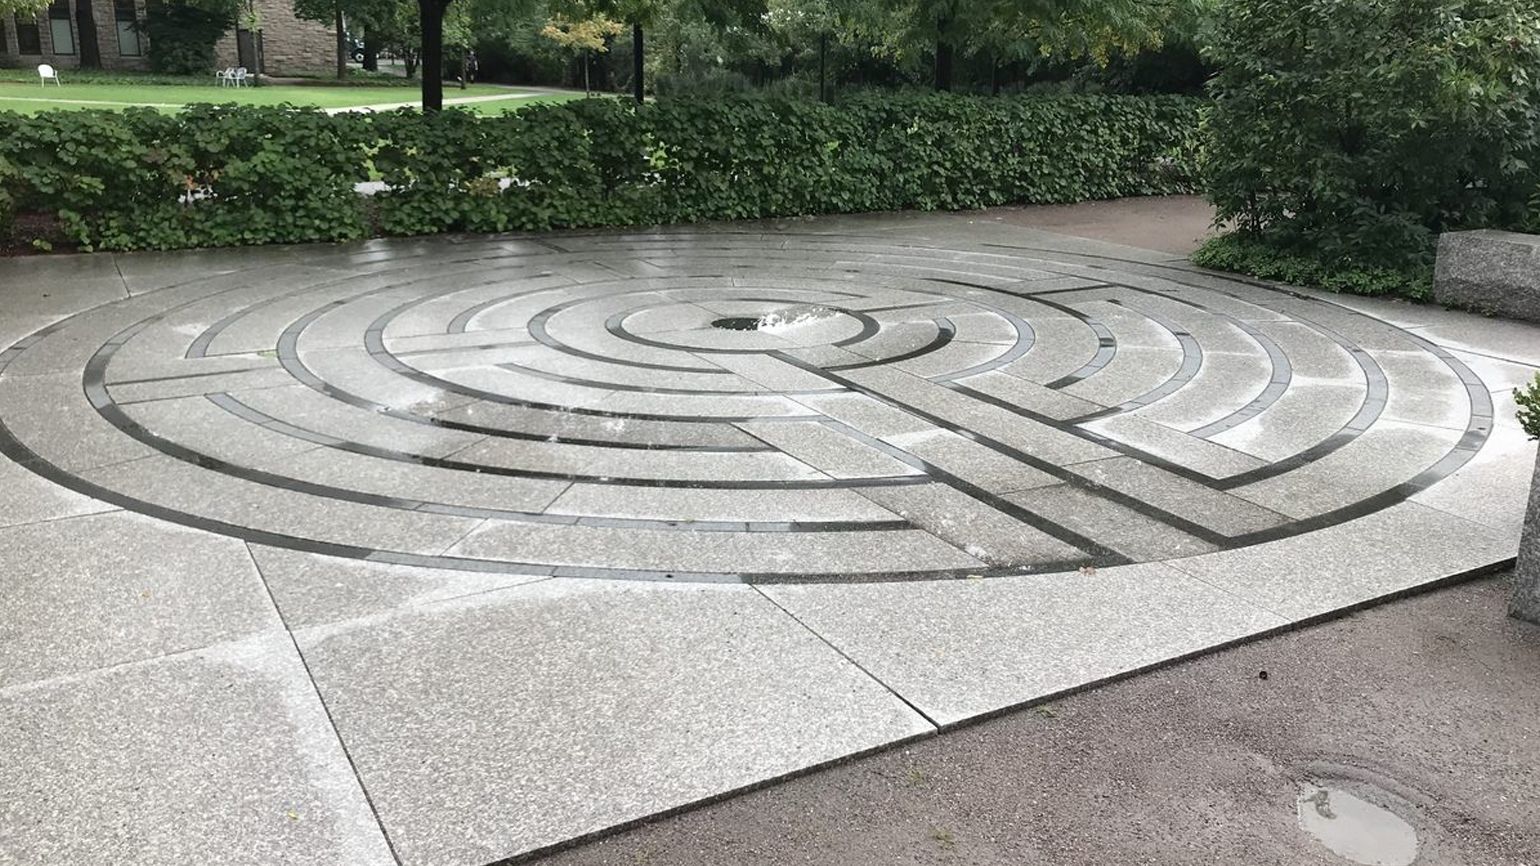 Harvard Divinity School Labyrinth; Photo credit: Anfurst (Atlas Obscura User)